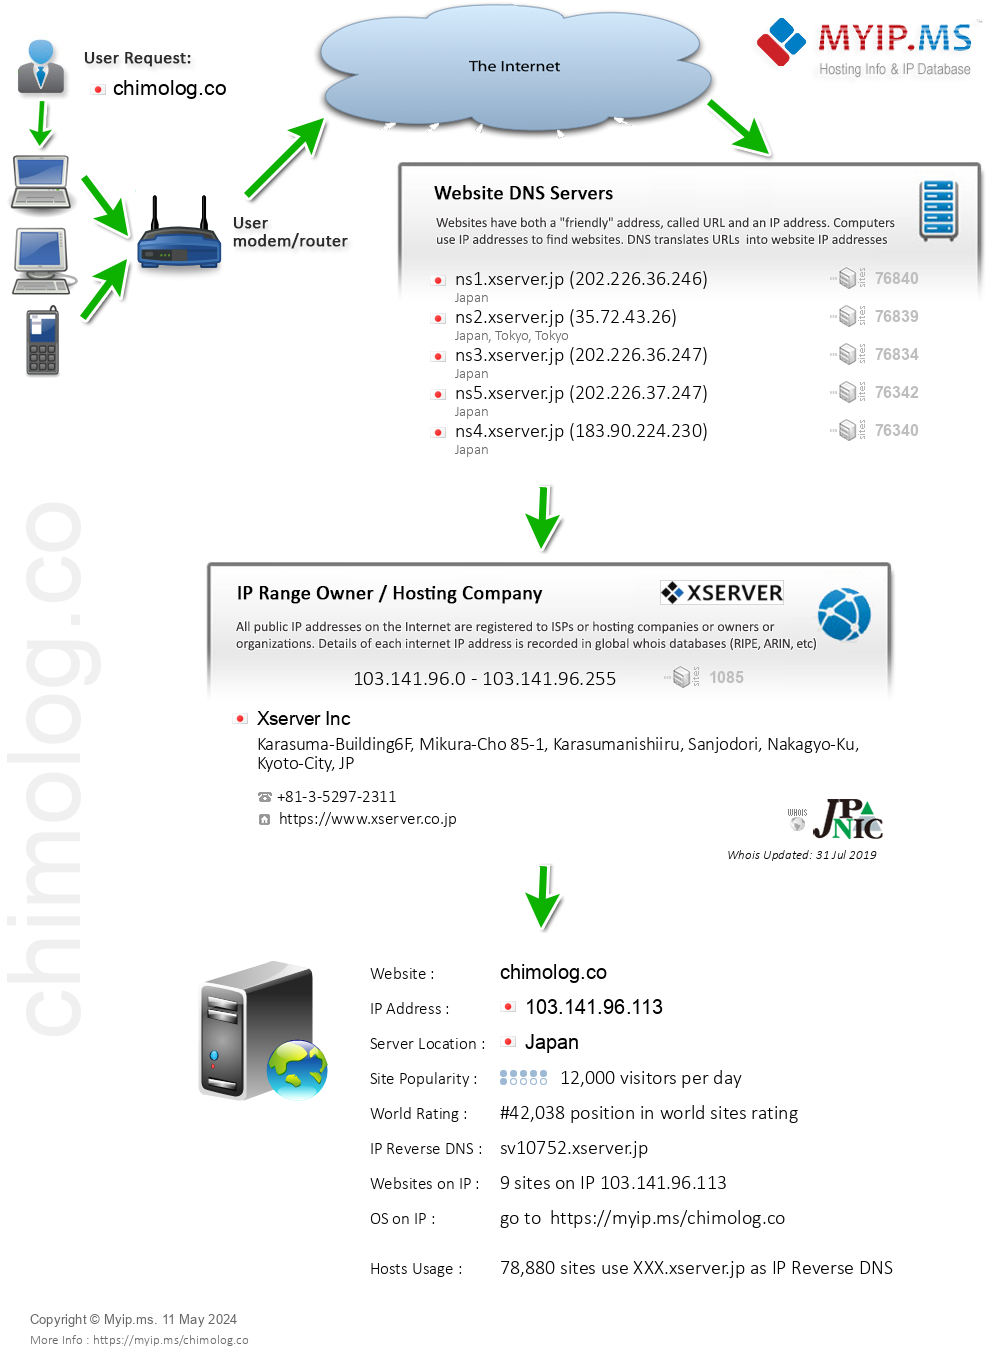 Chimolog.co - Website Hosting Visual IP Diagram